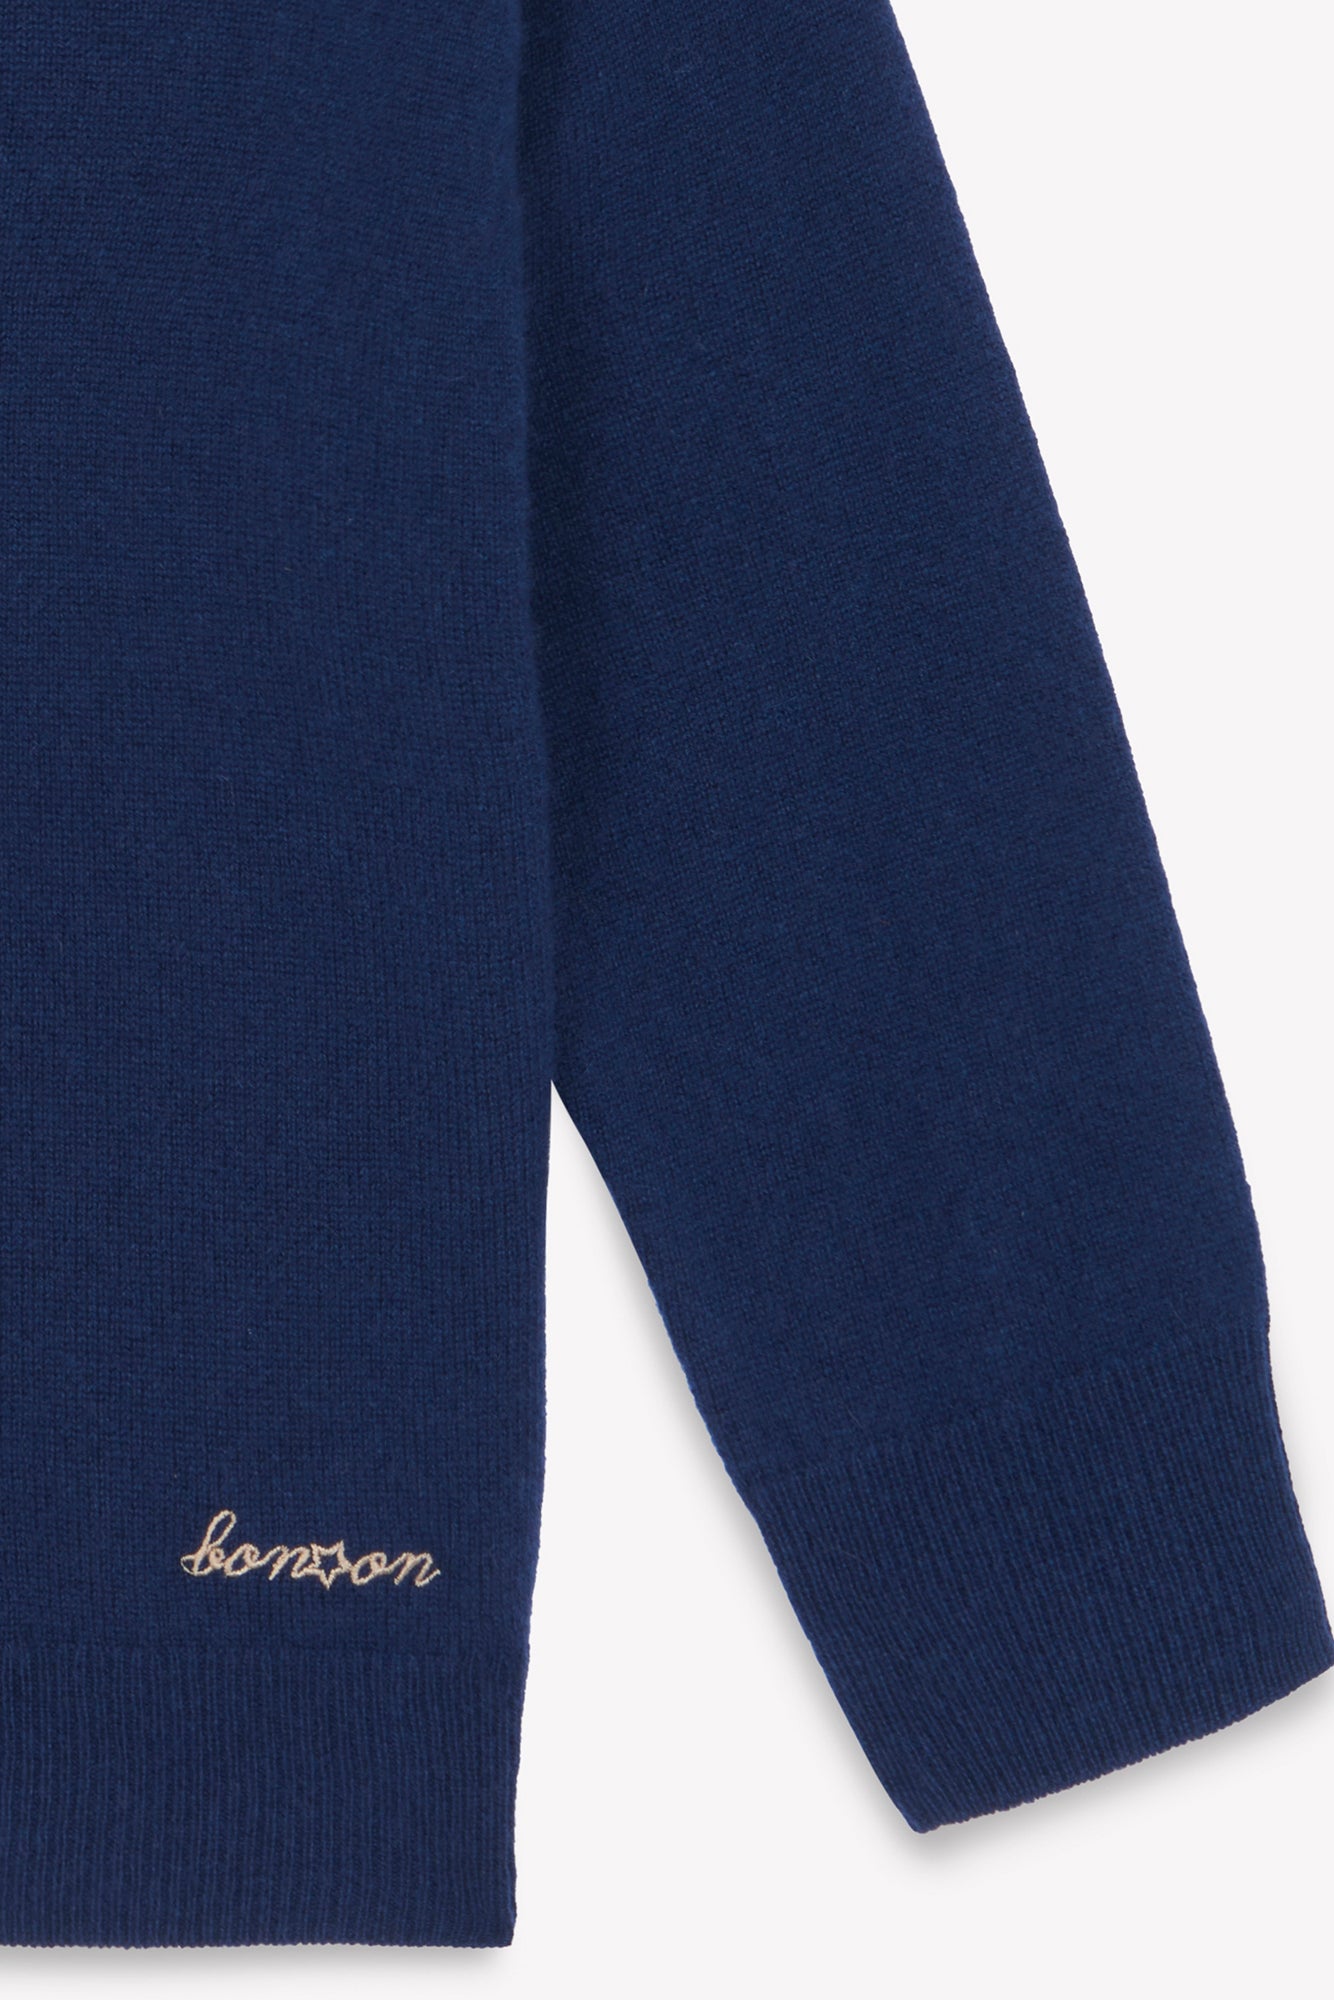 Sweater - Blue 100% Cashmere